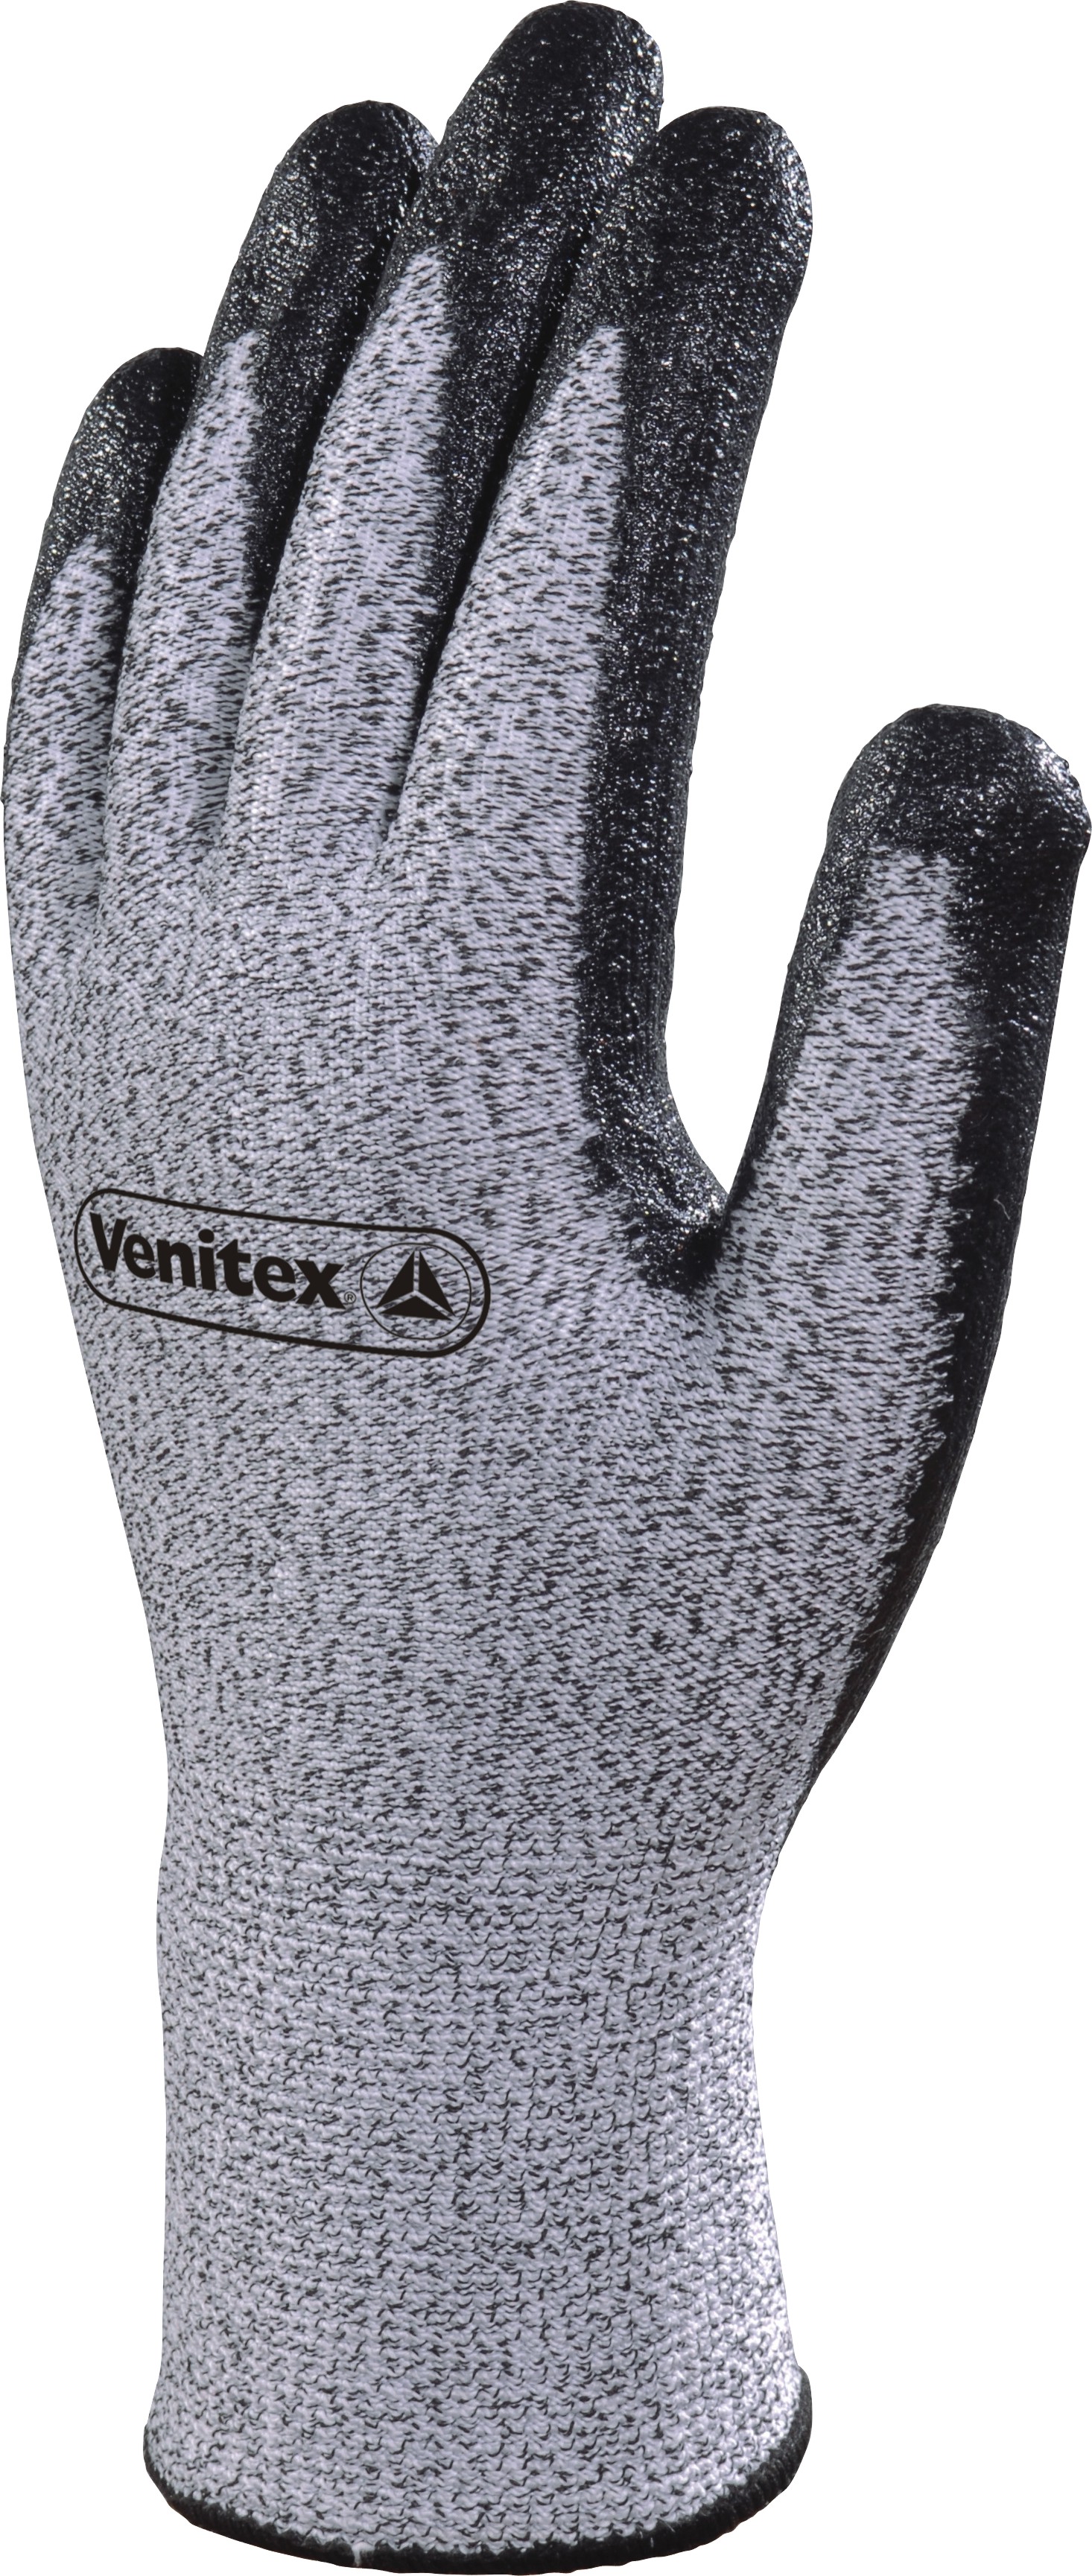 VENICUT41 rukavice